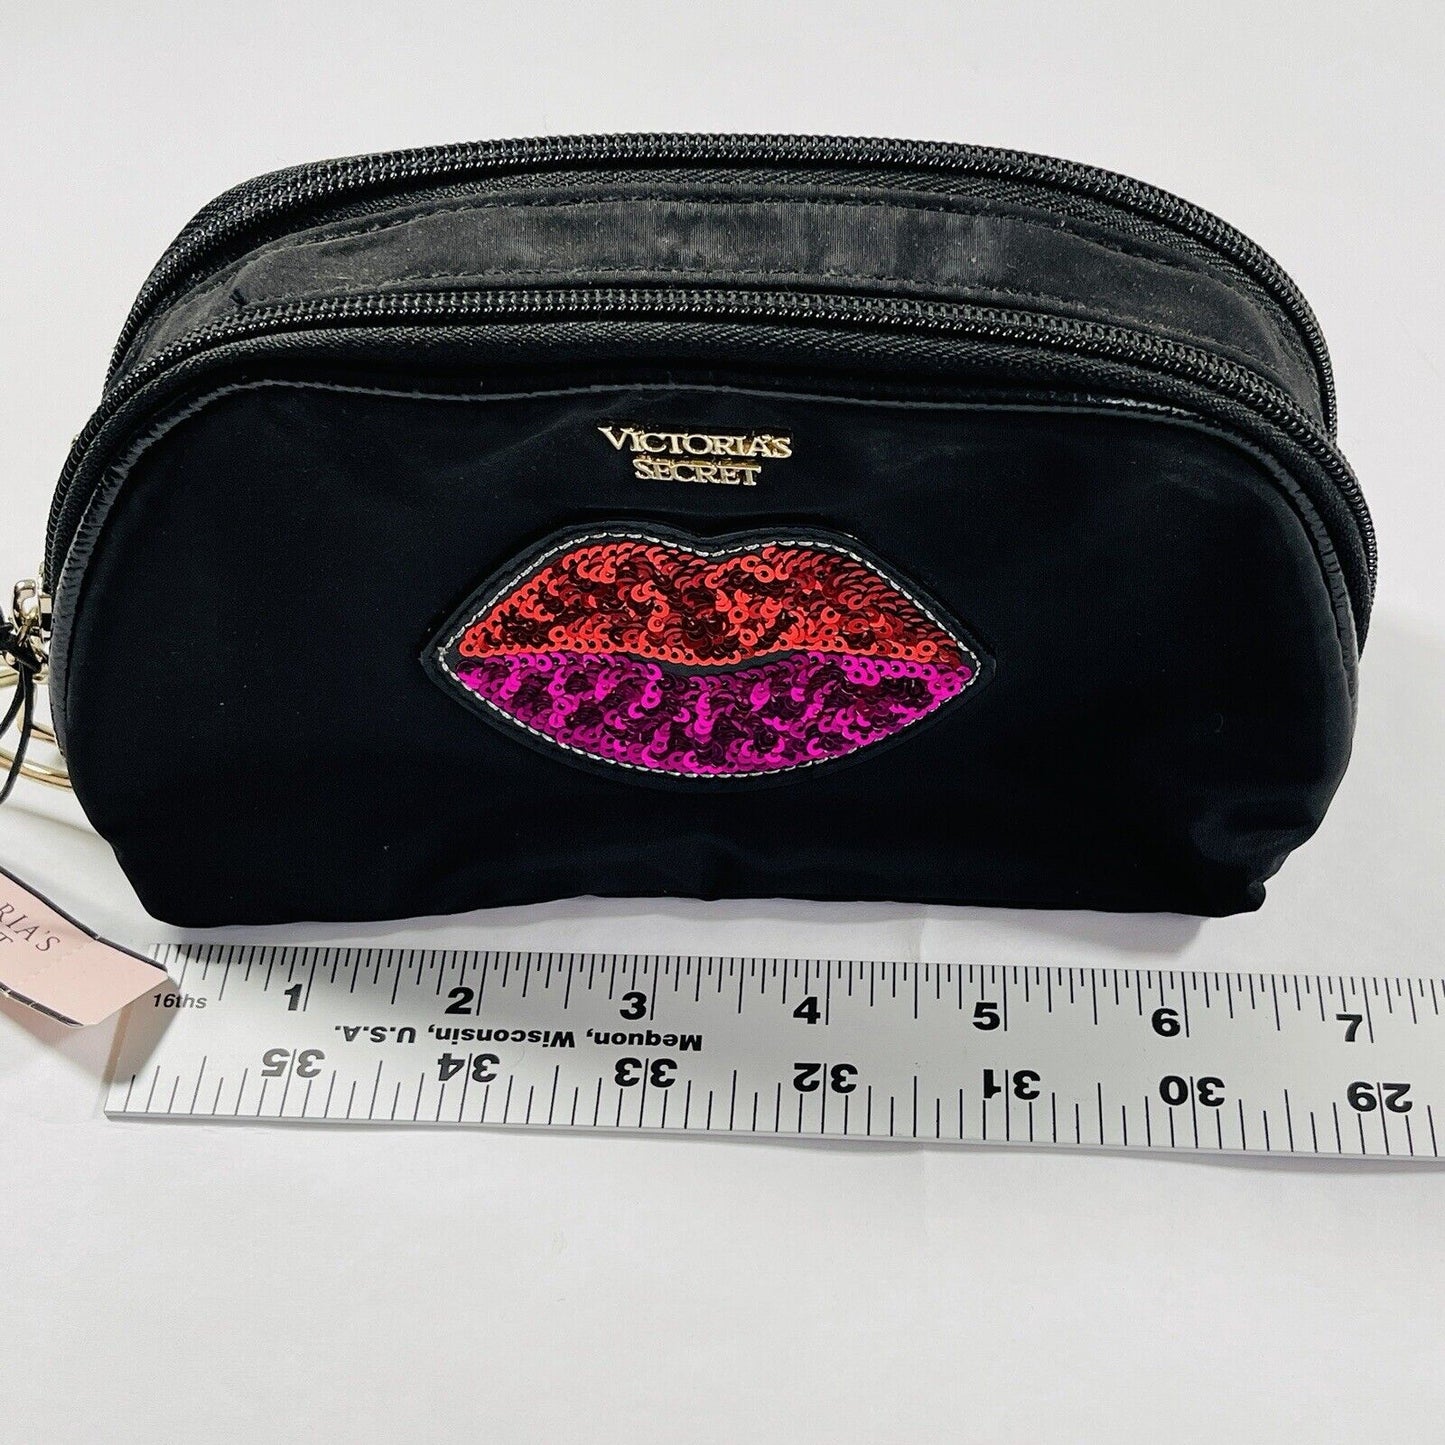 Victorias Secret NWT Black Sequin Lips Love Pouch Clutch Makeup Cosmetic Bag